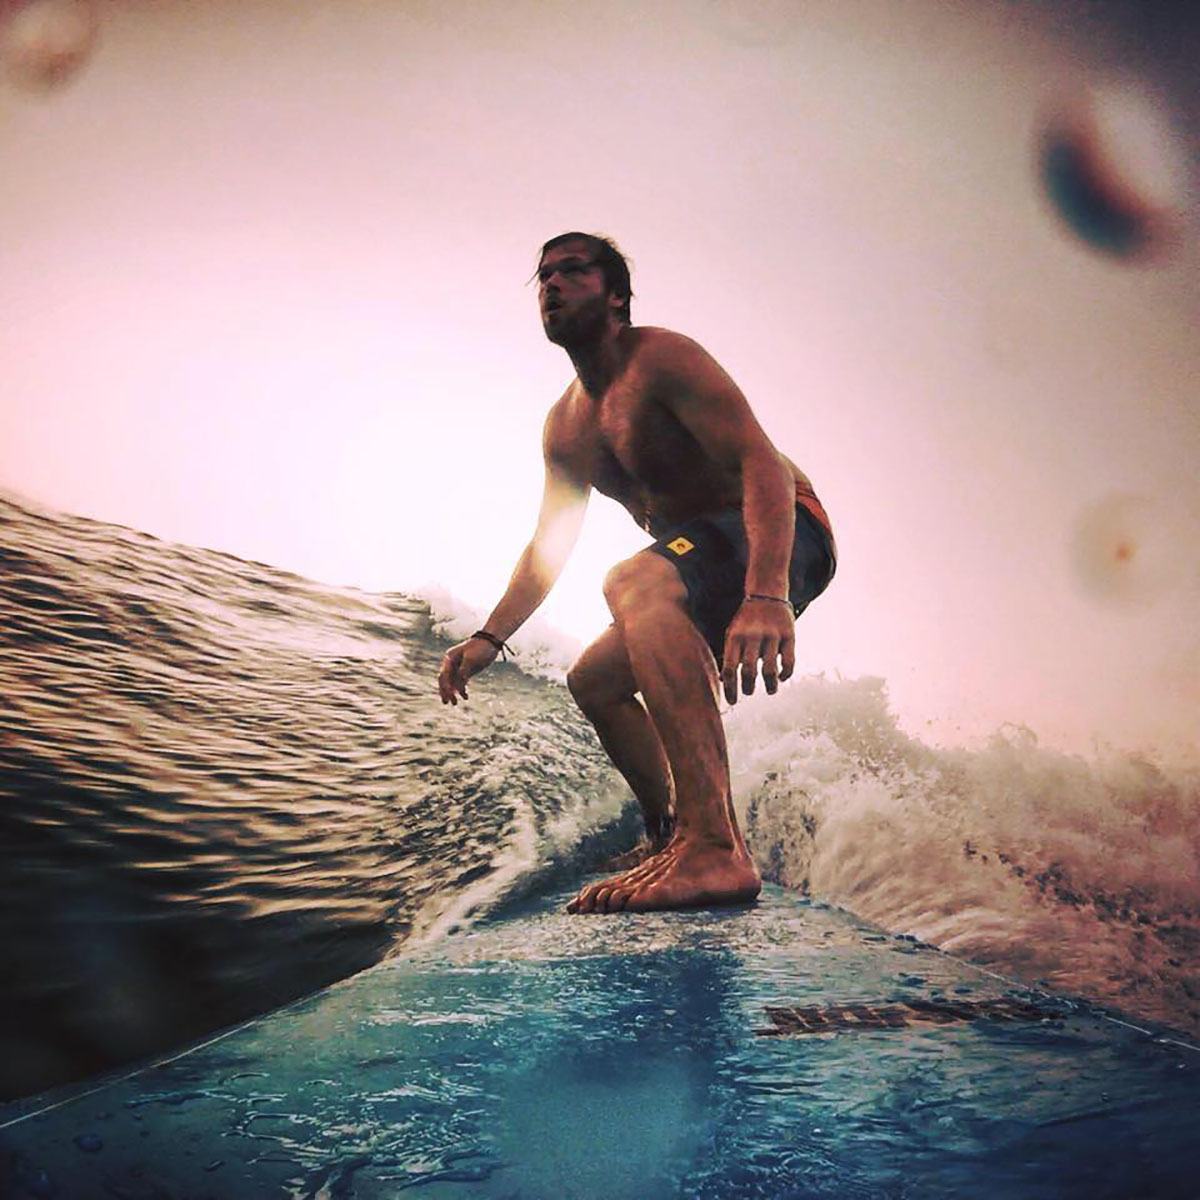 Kai Klueting Surf